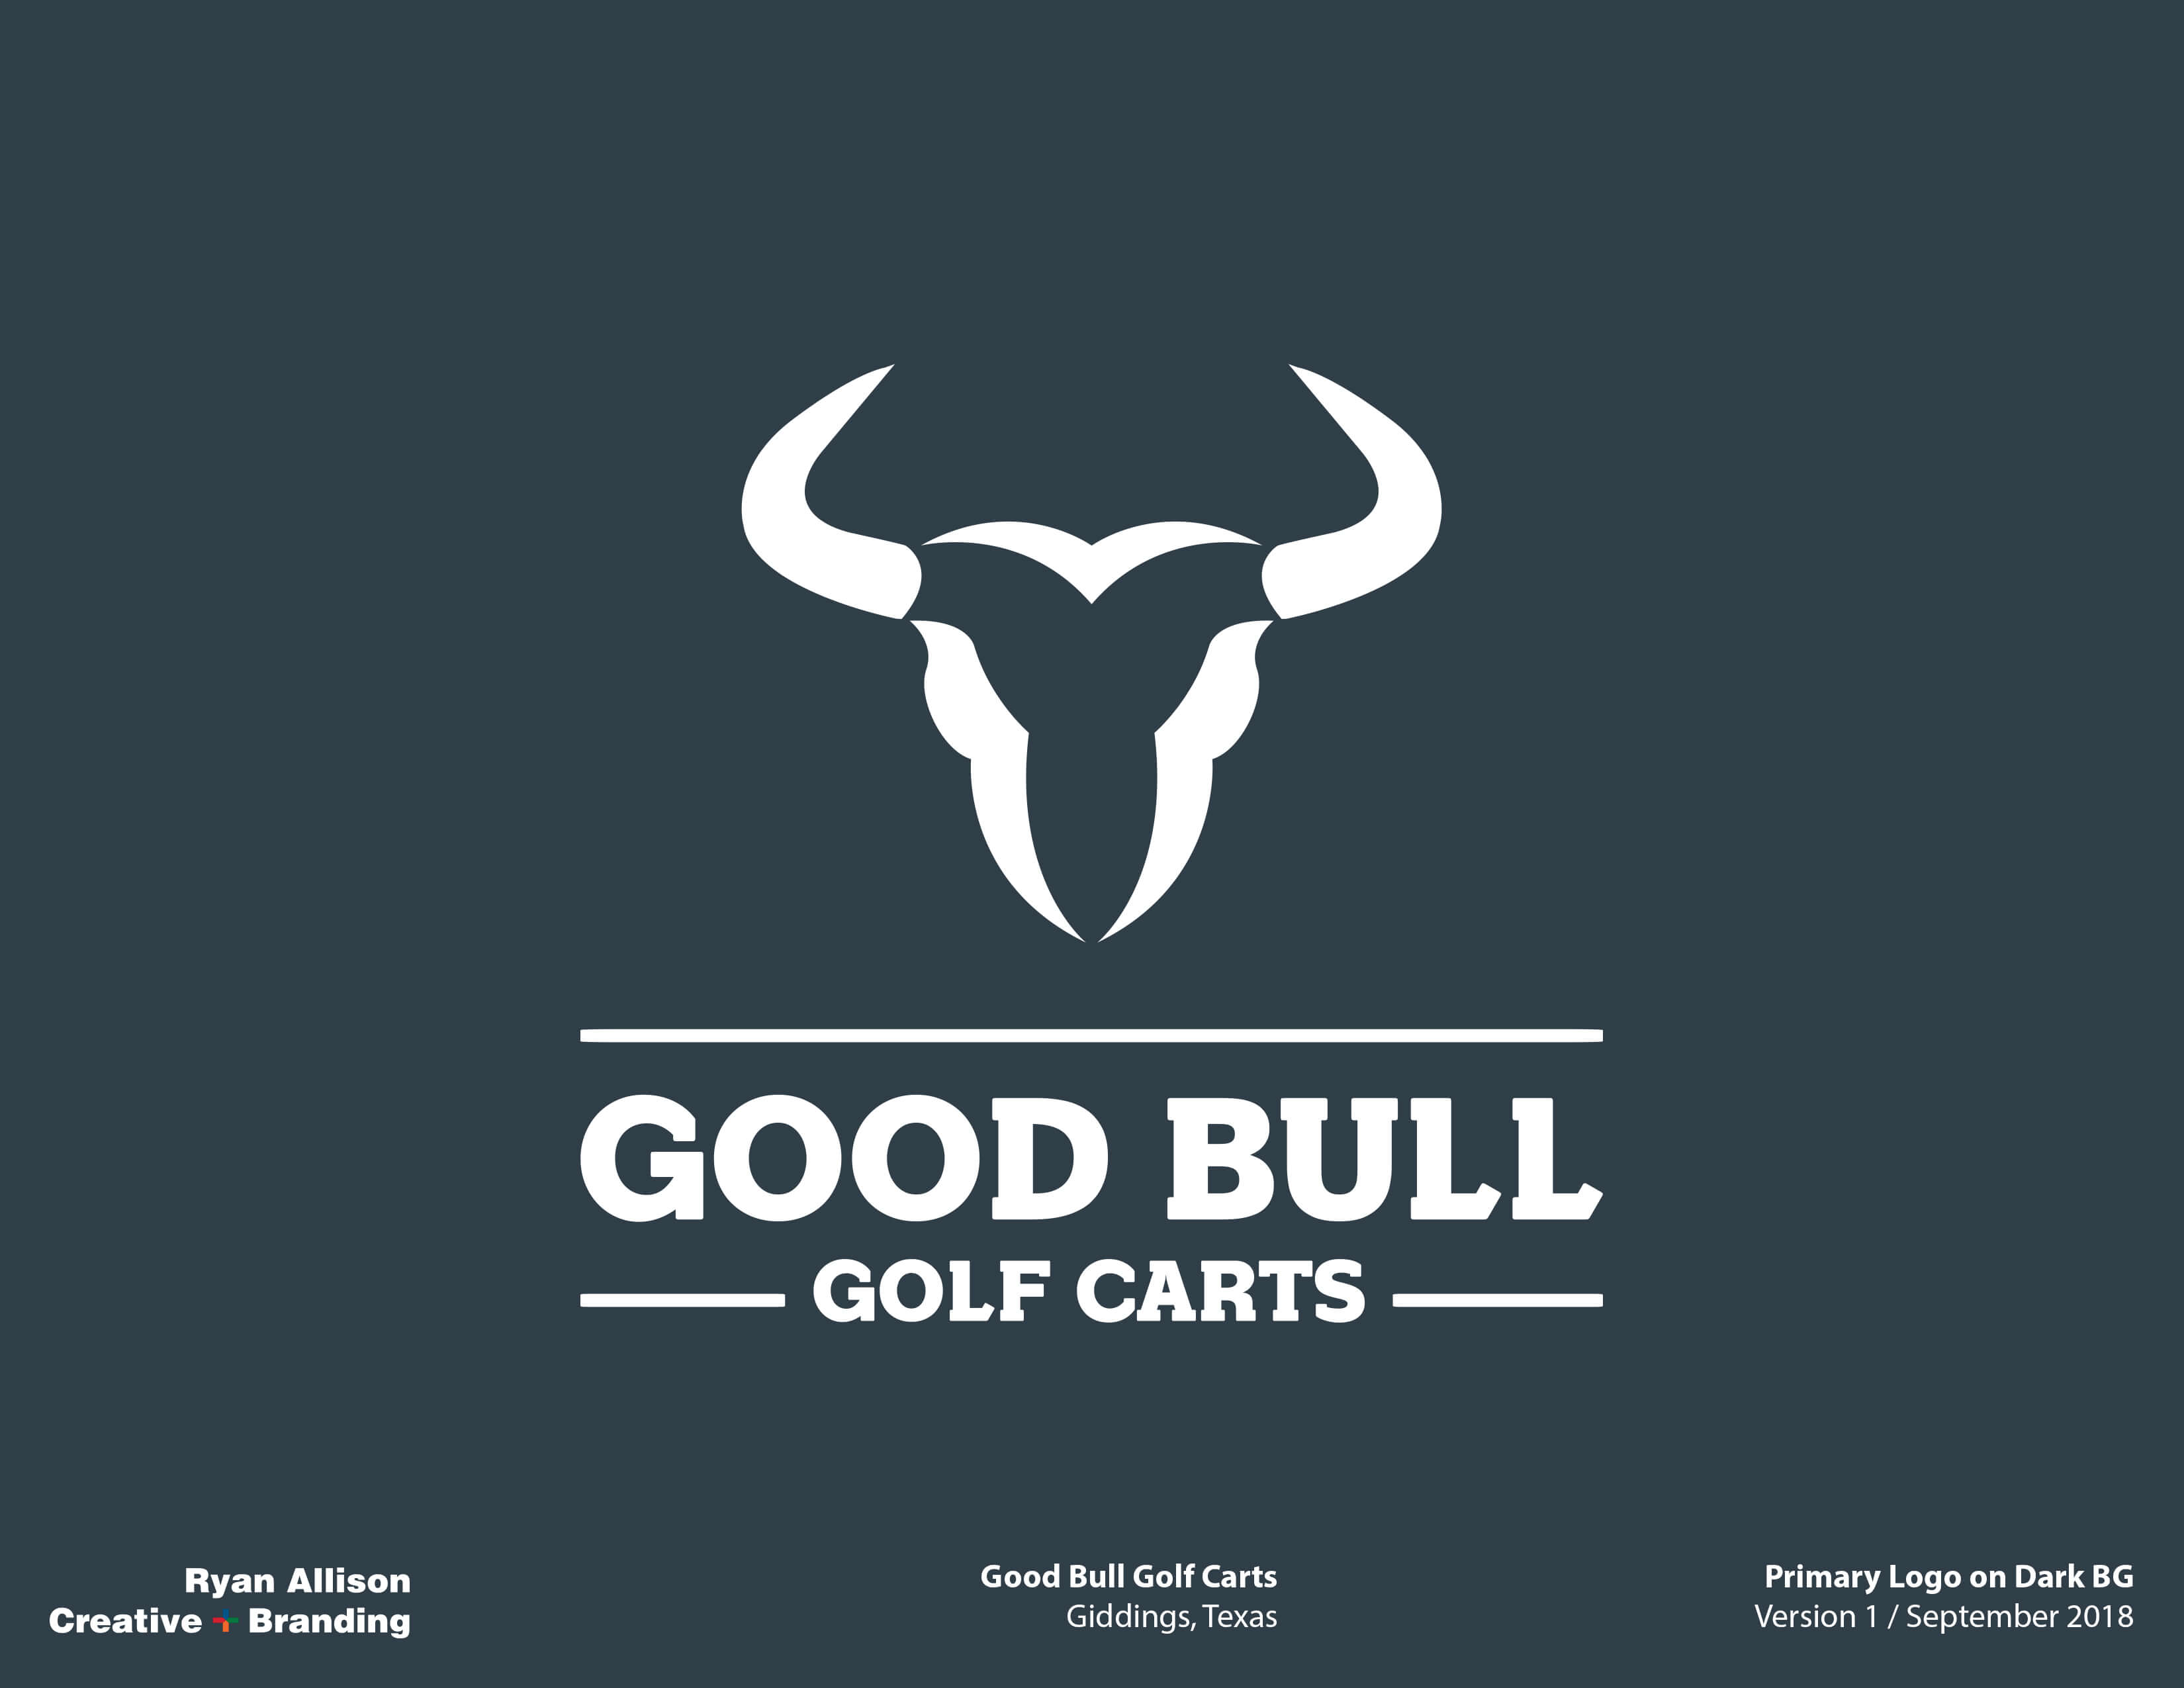 Good Bull Golf Carts Primary Logo on Dark BG - Logo - Ryan Allison Creative + Branding